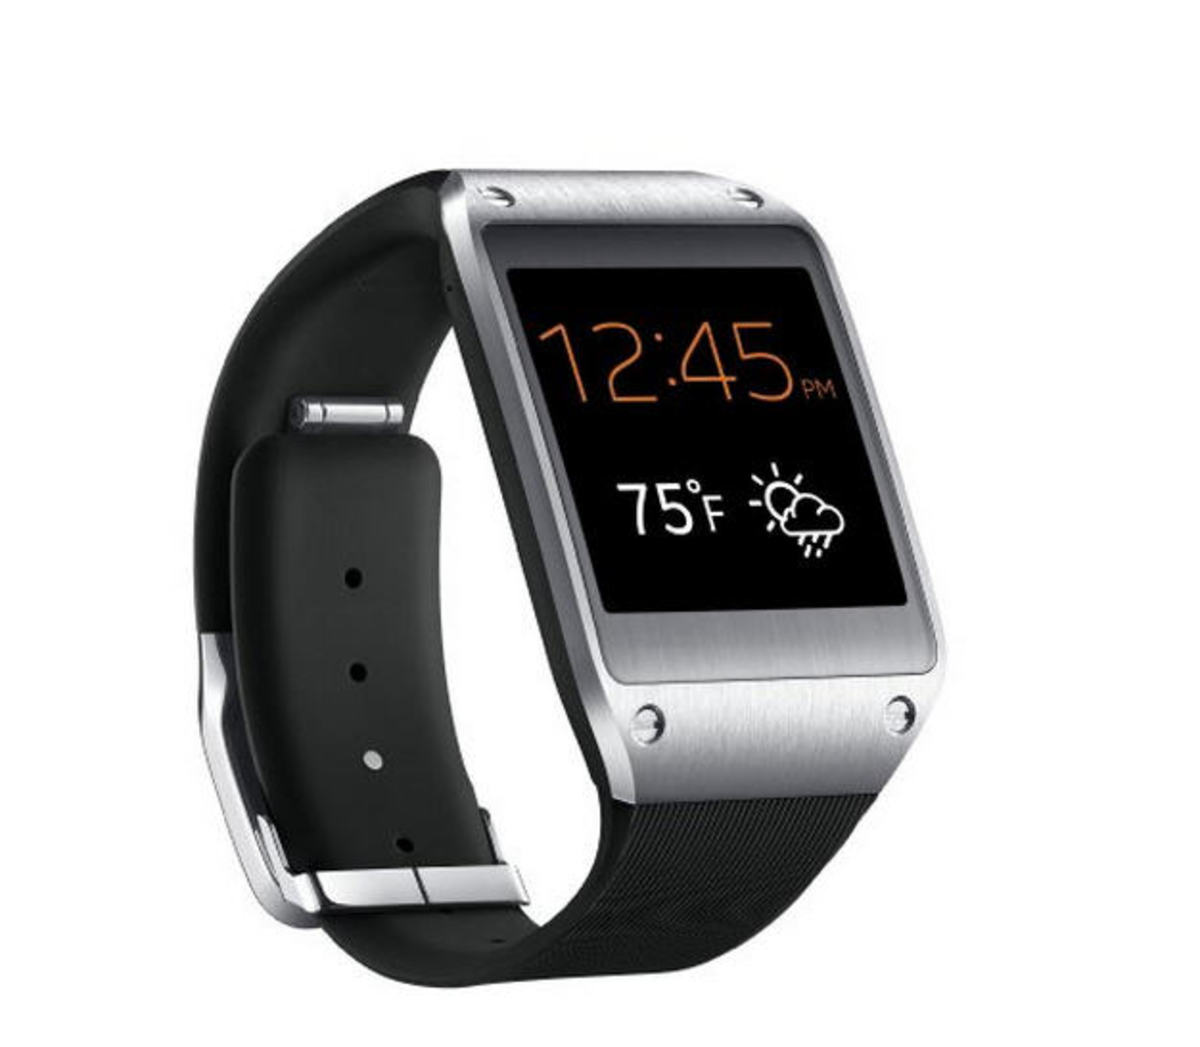 Samsung Galaxy Gear Smartwatch.